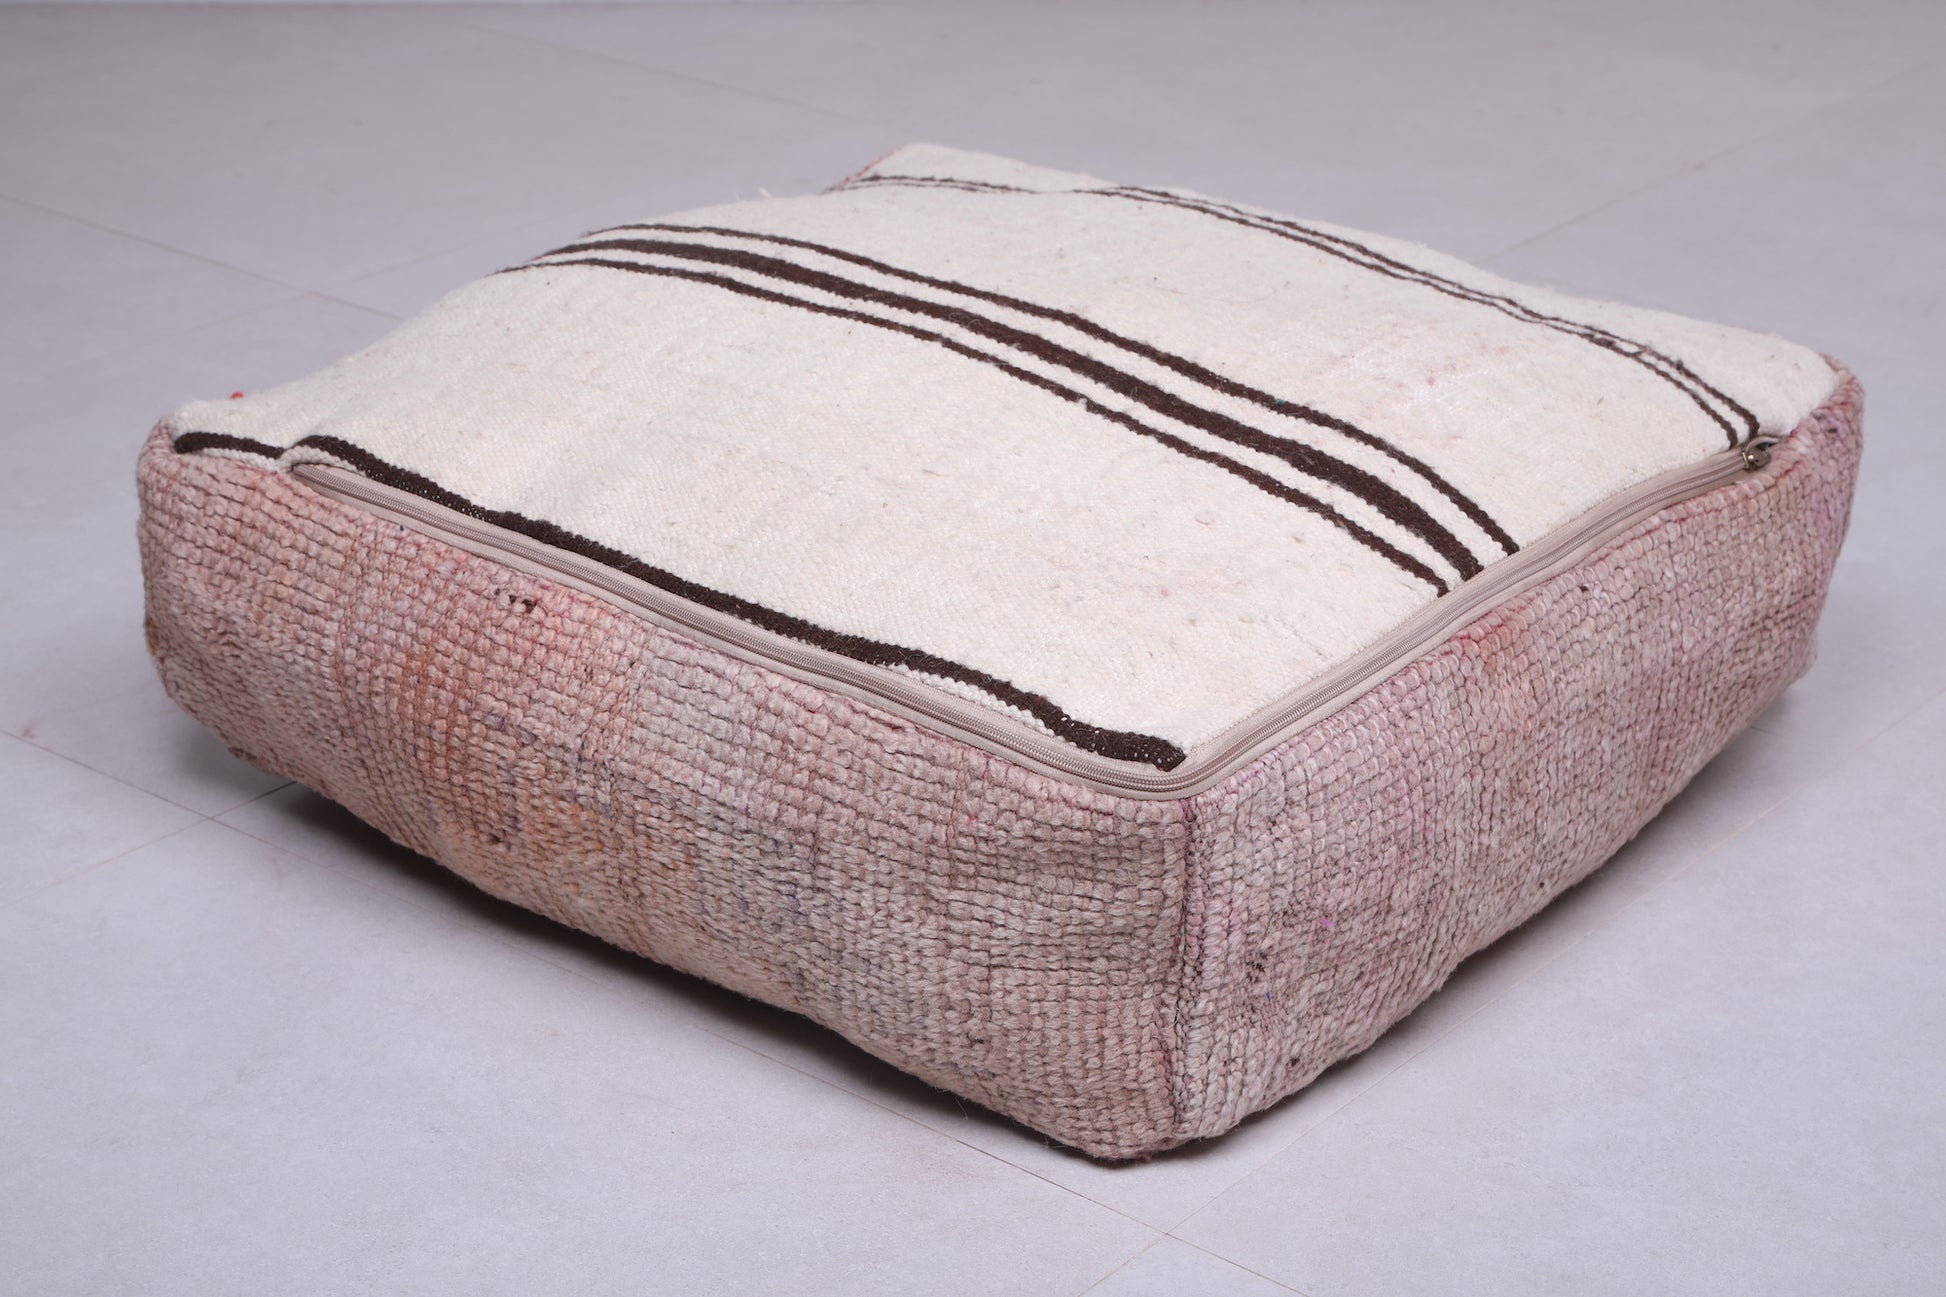 Two Antique handmade Ottoman rug Poufs